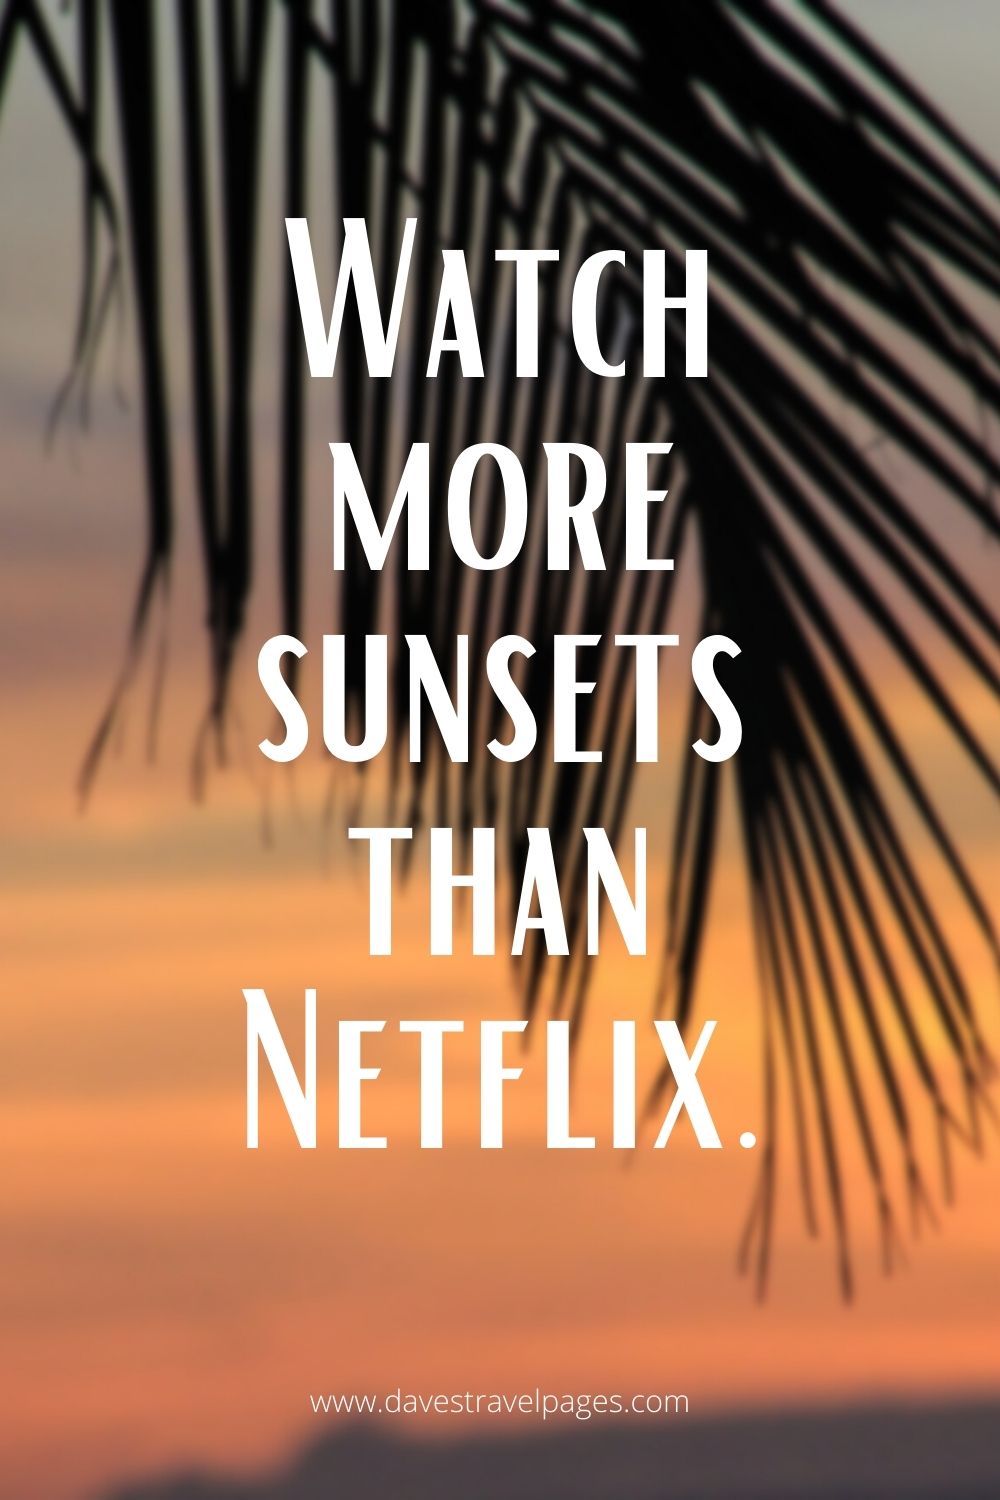 Watch more sunsets than Netflix captions